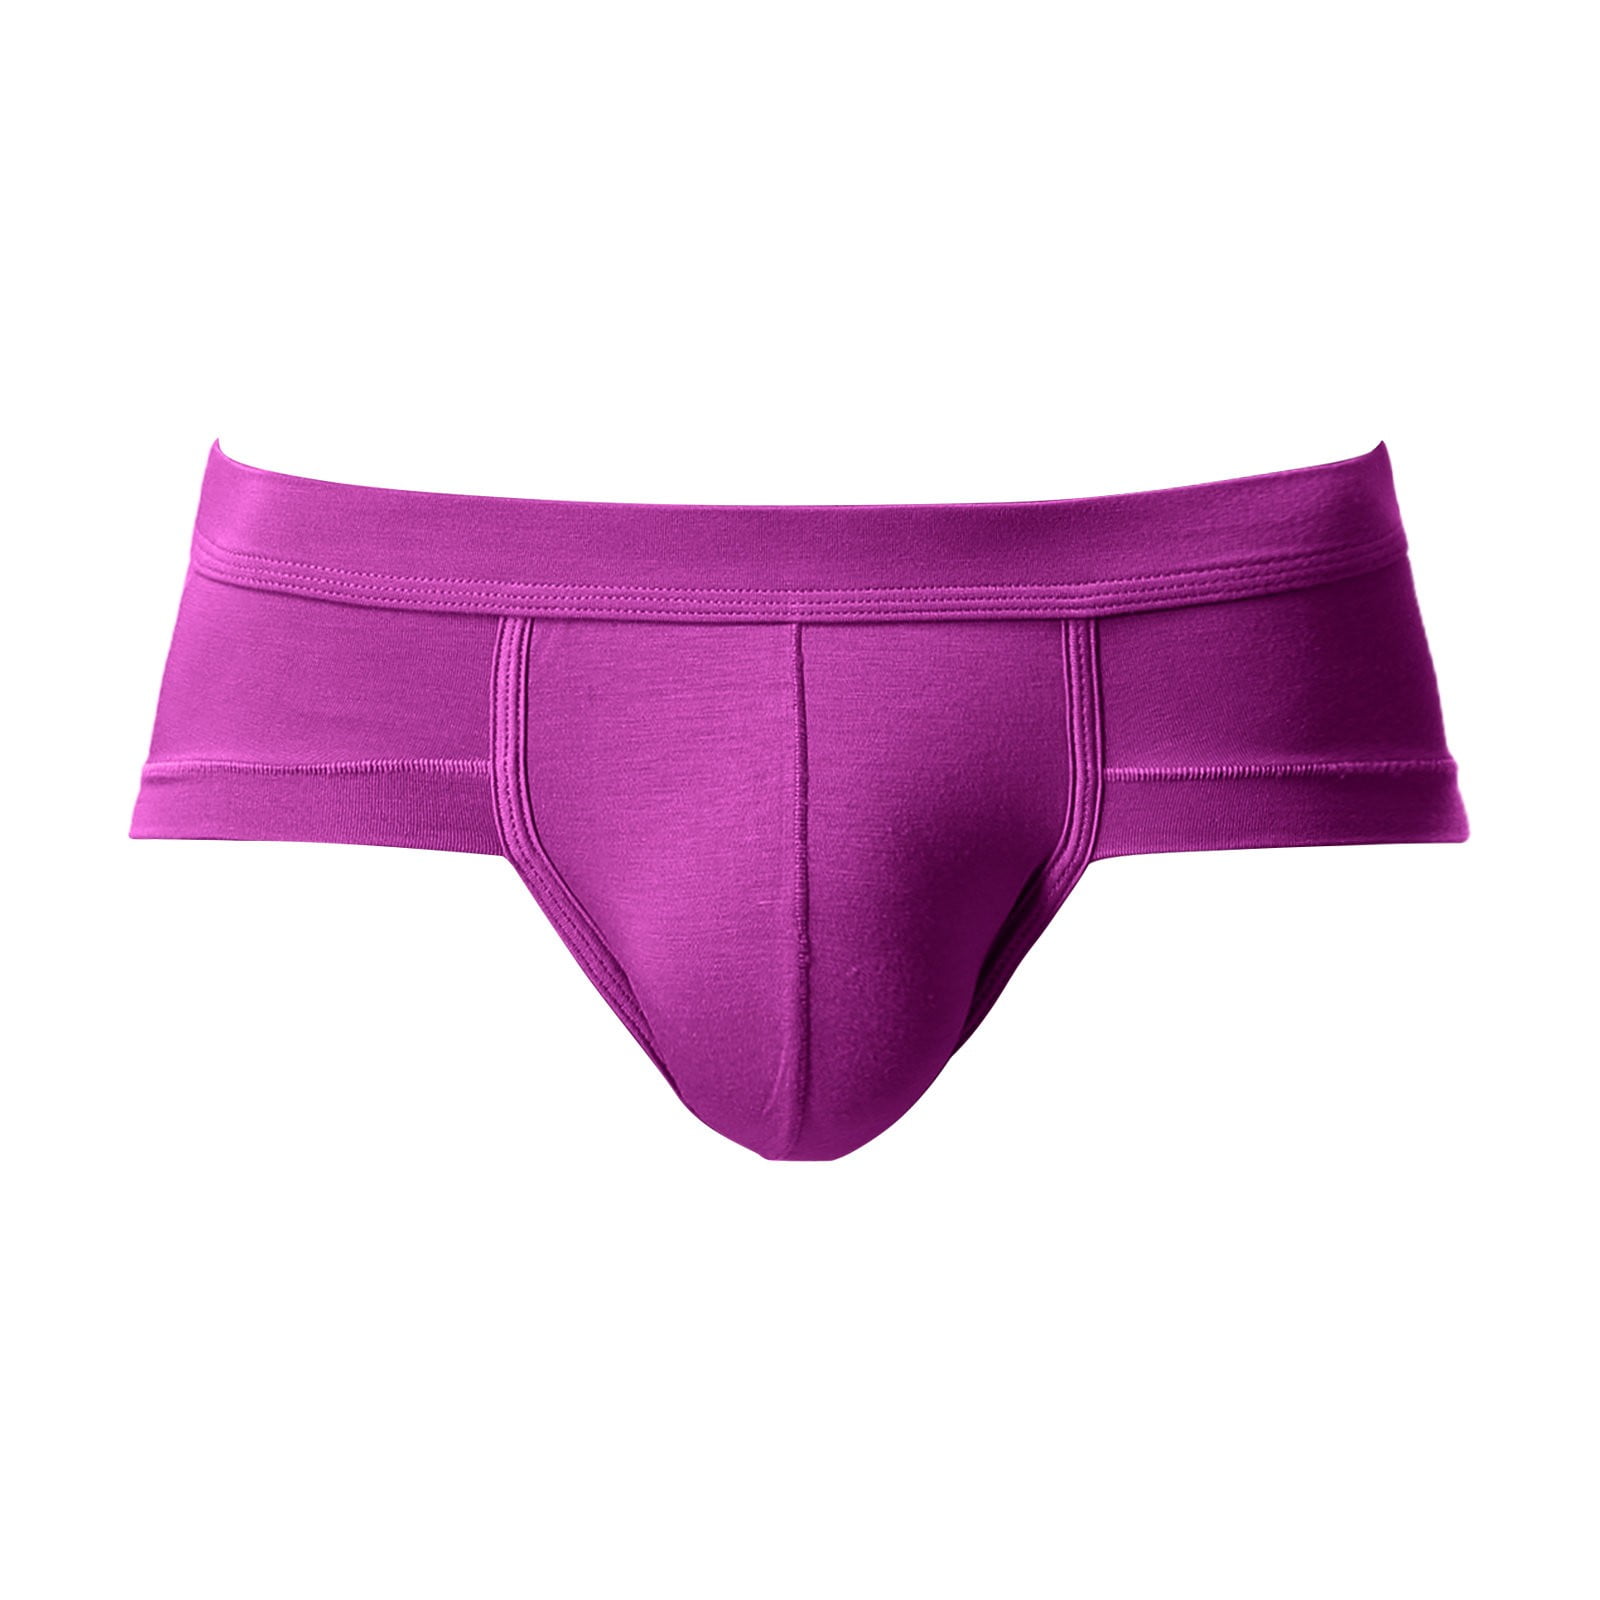 Pimfylm Underwear For Men Pack Briefs Men's Underwear Classic Full Rise ...